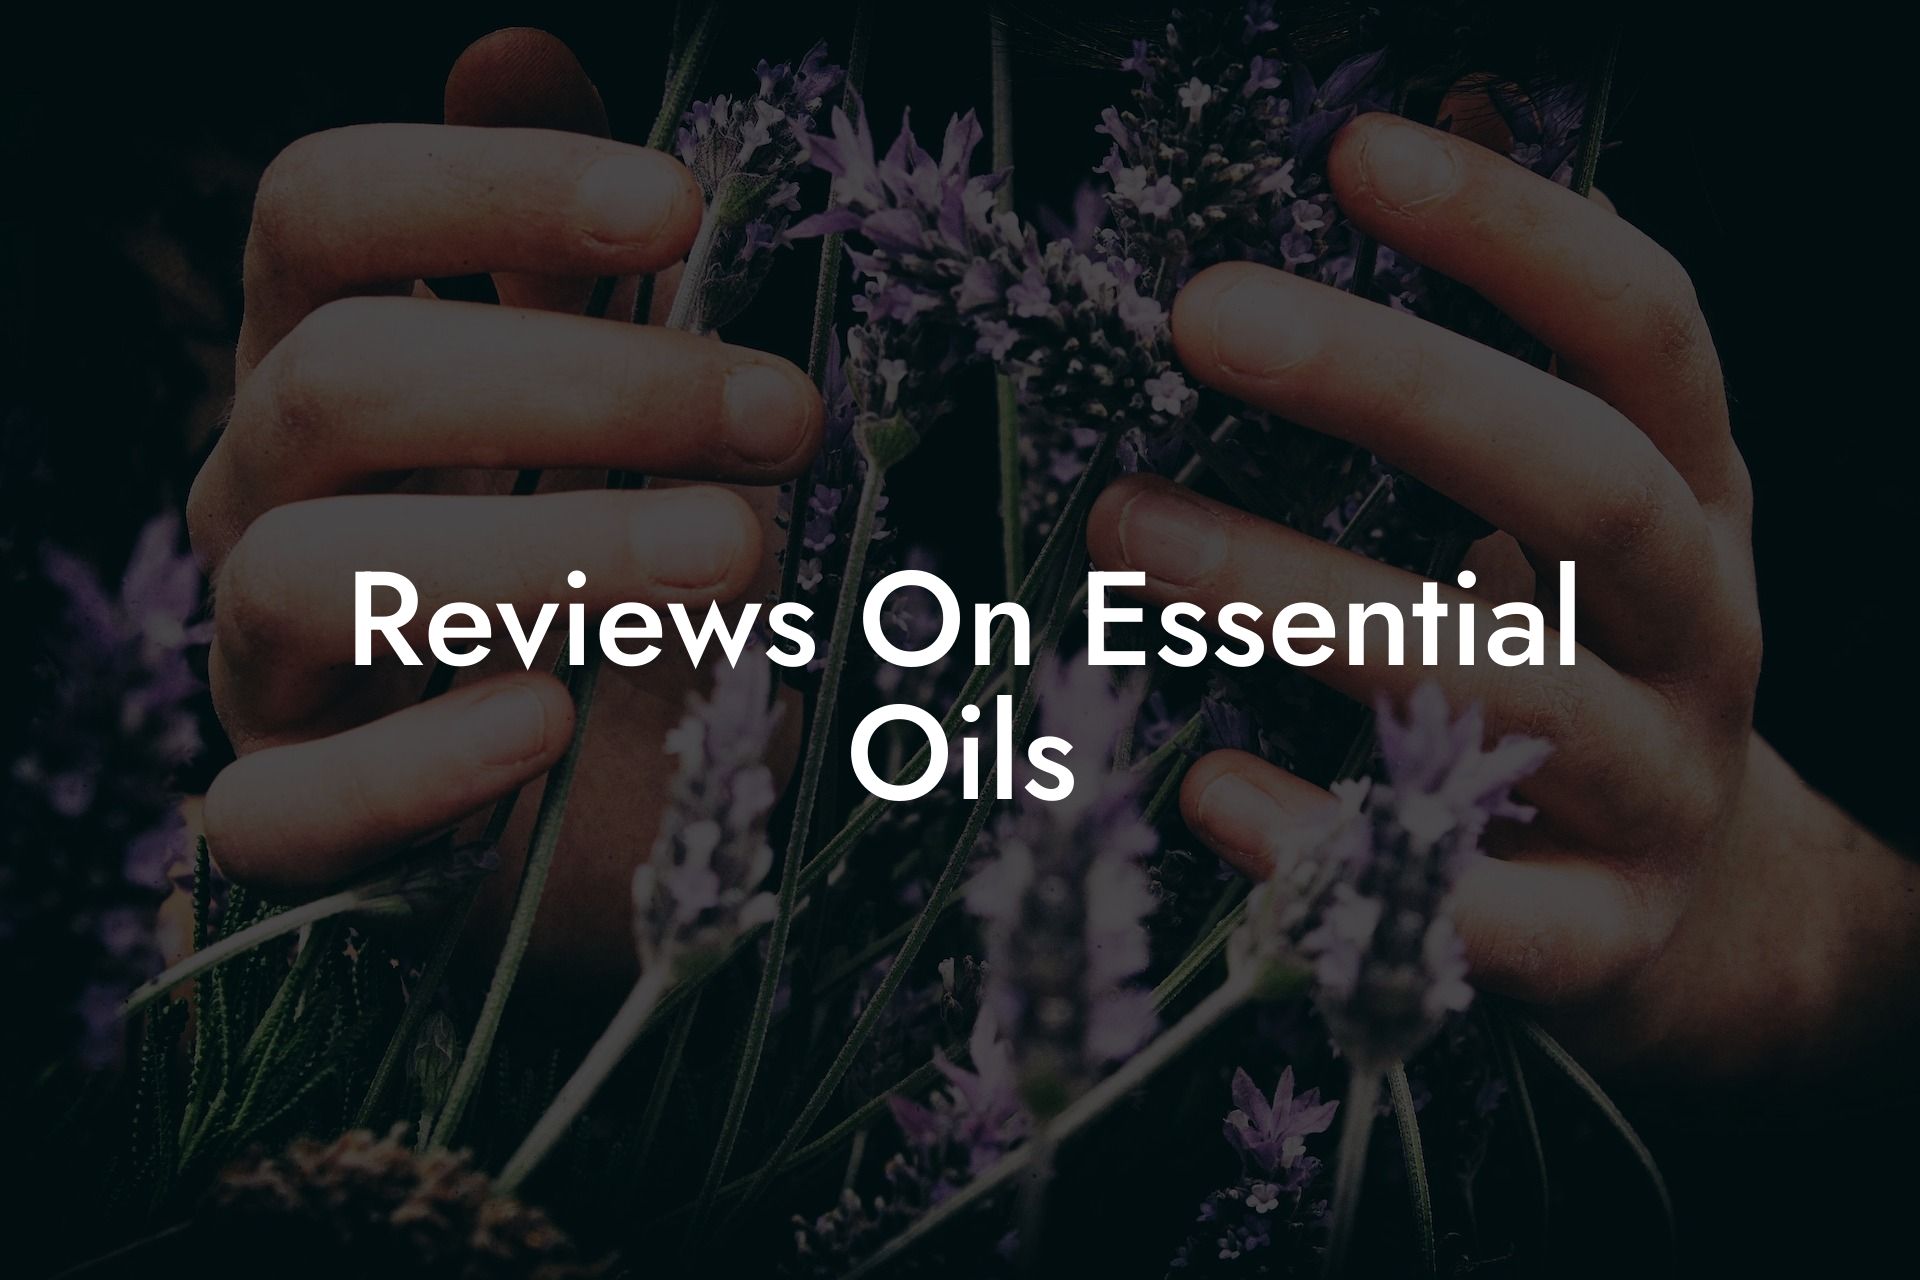 Reviews On Essential Oils